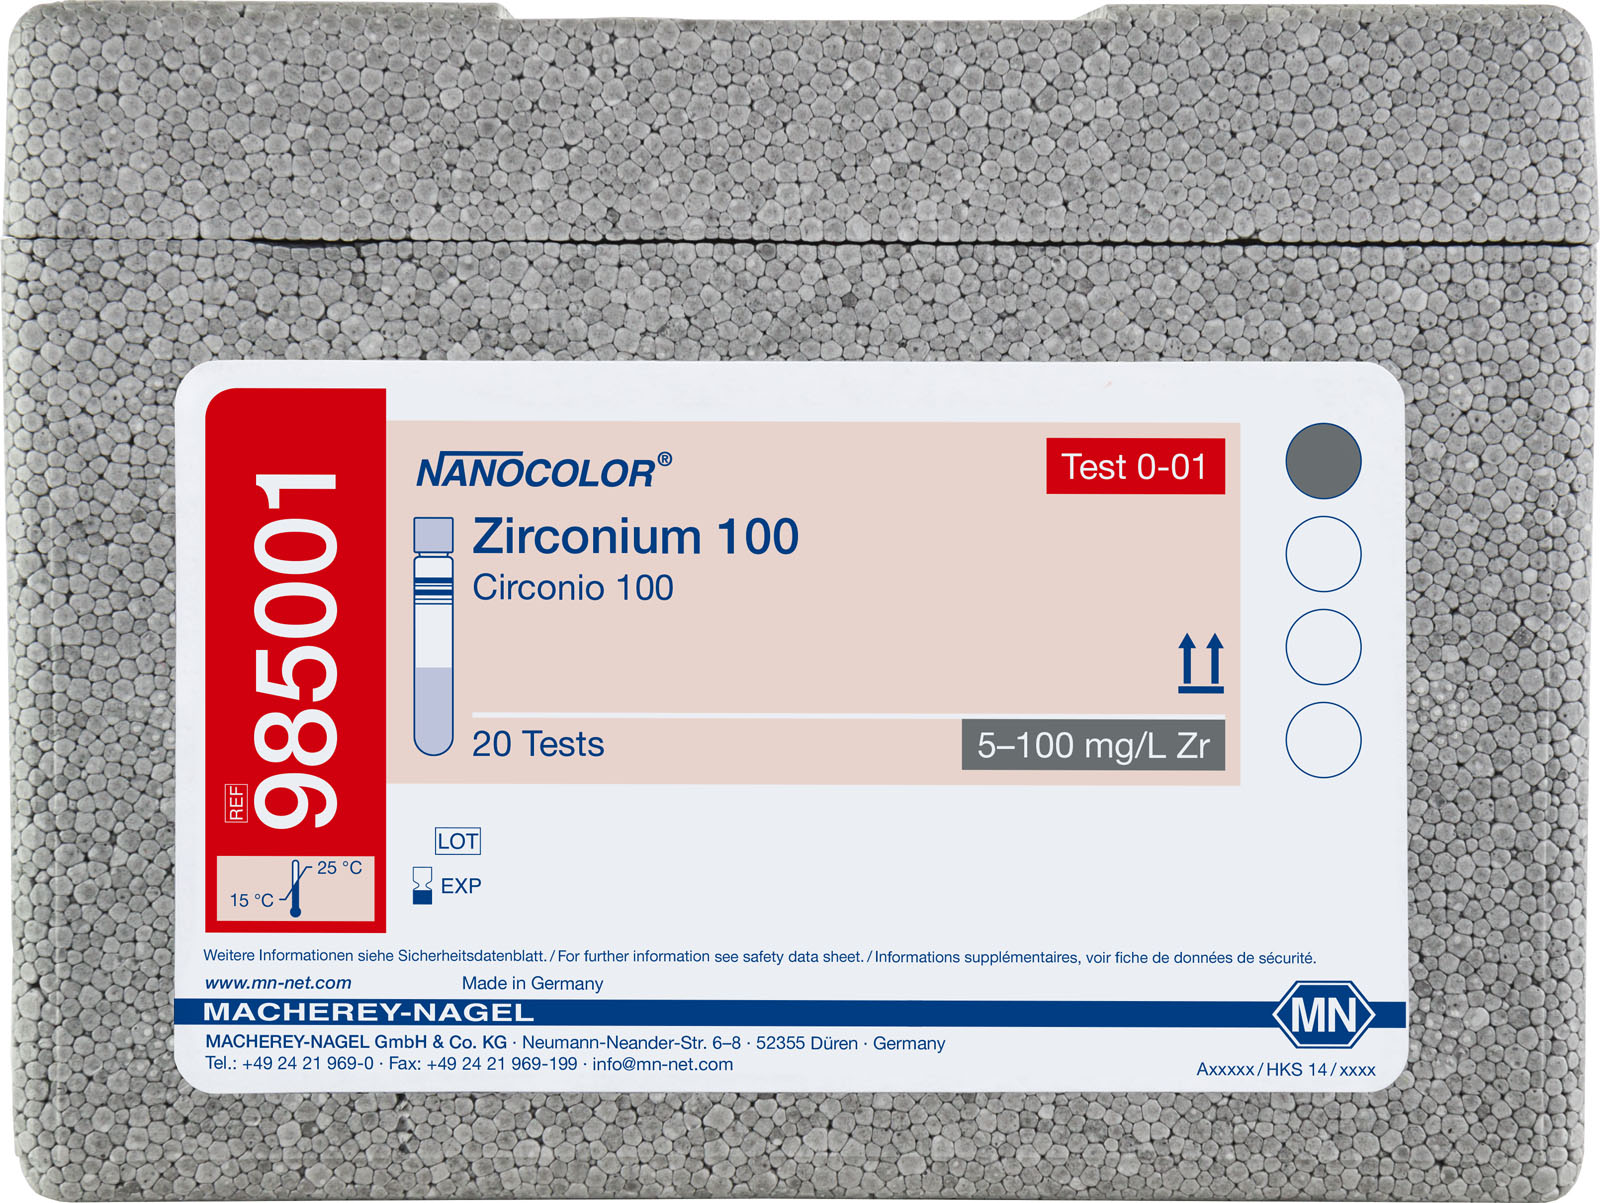 RUK NANOCOLOR- Zirconium 100